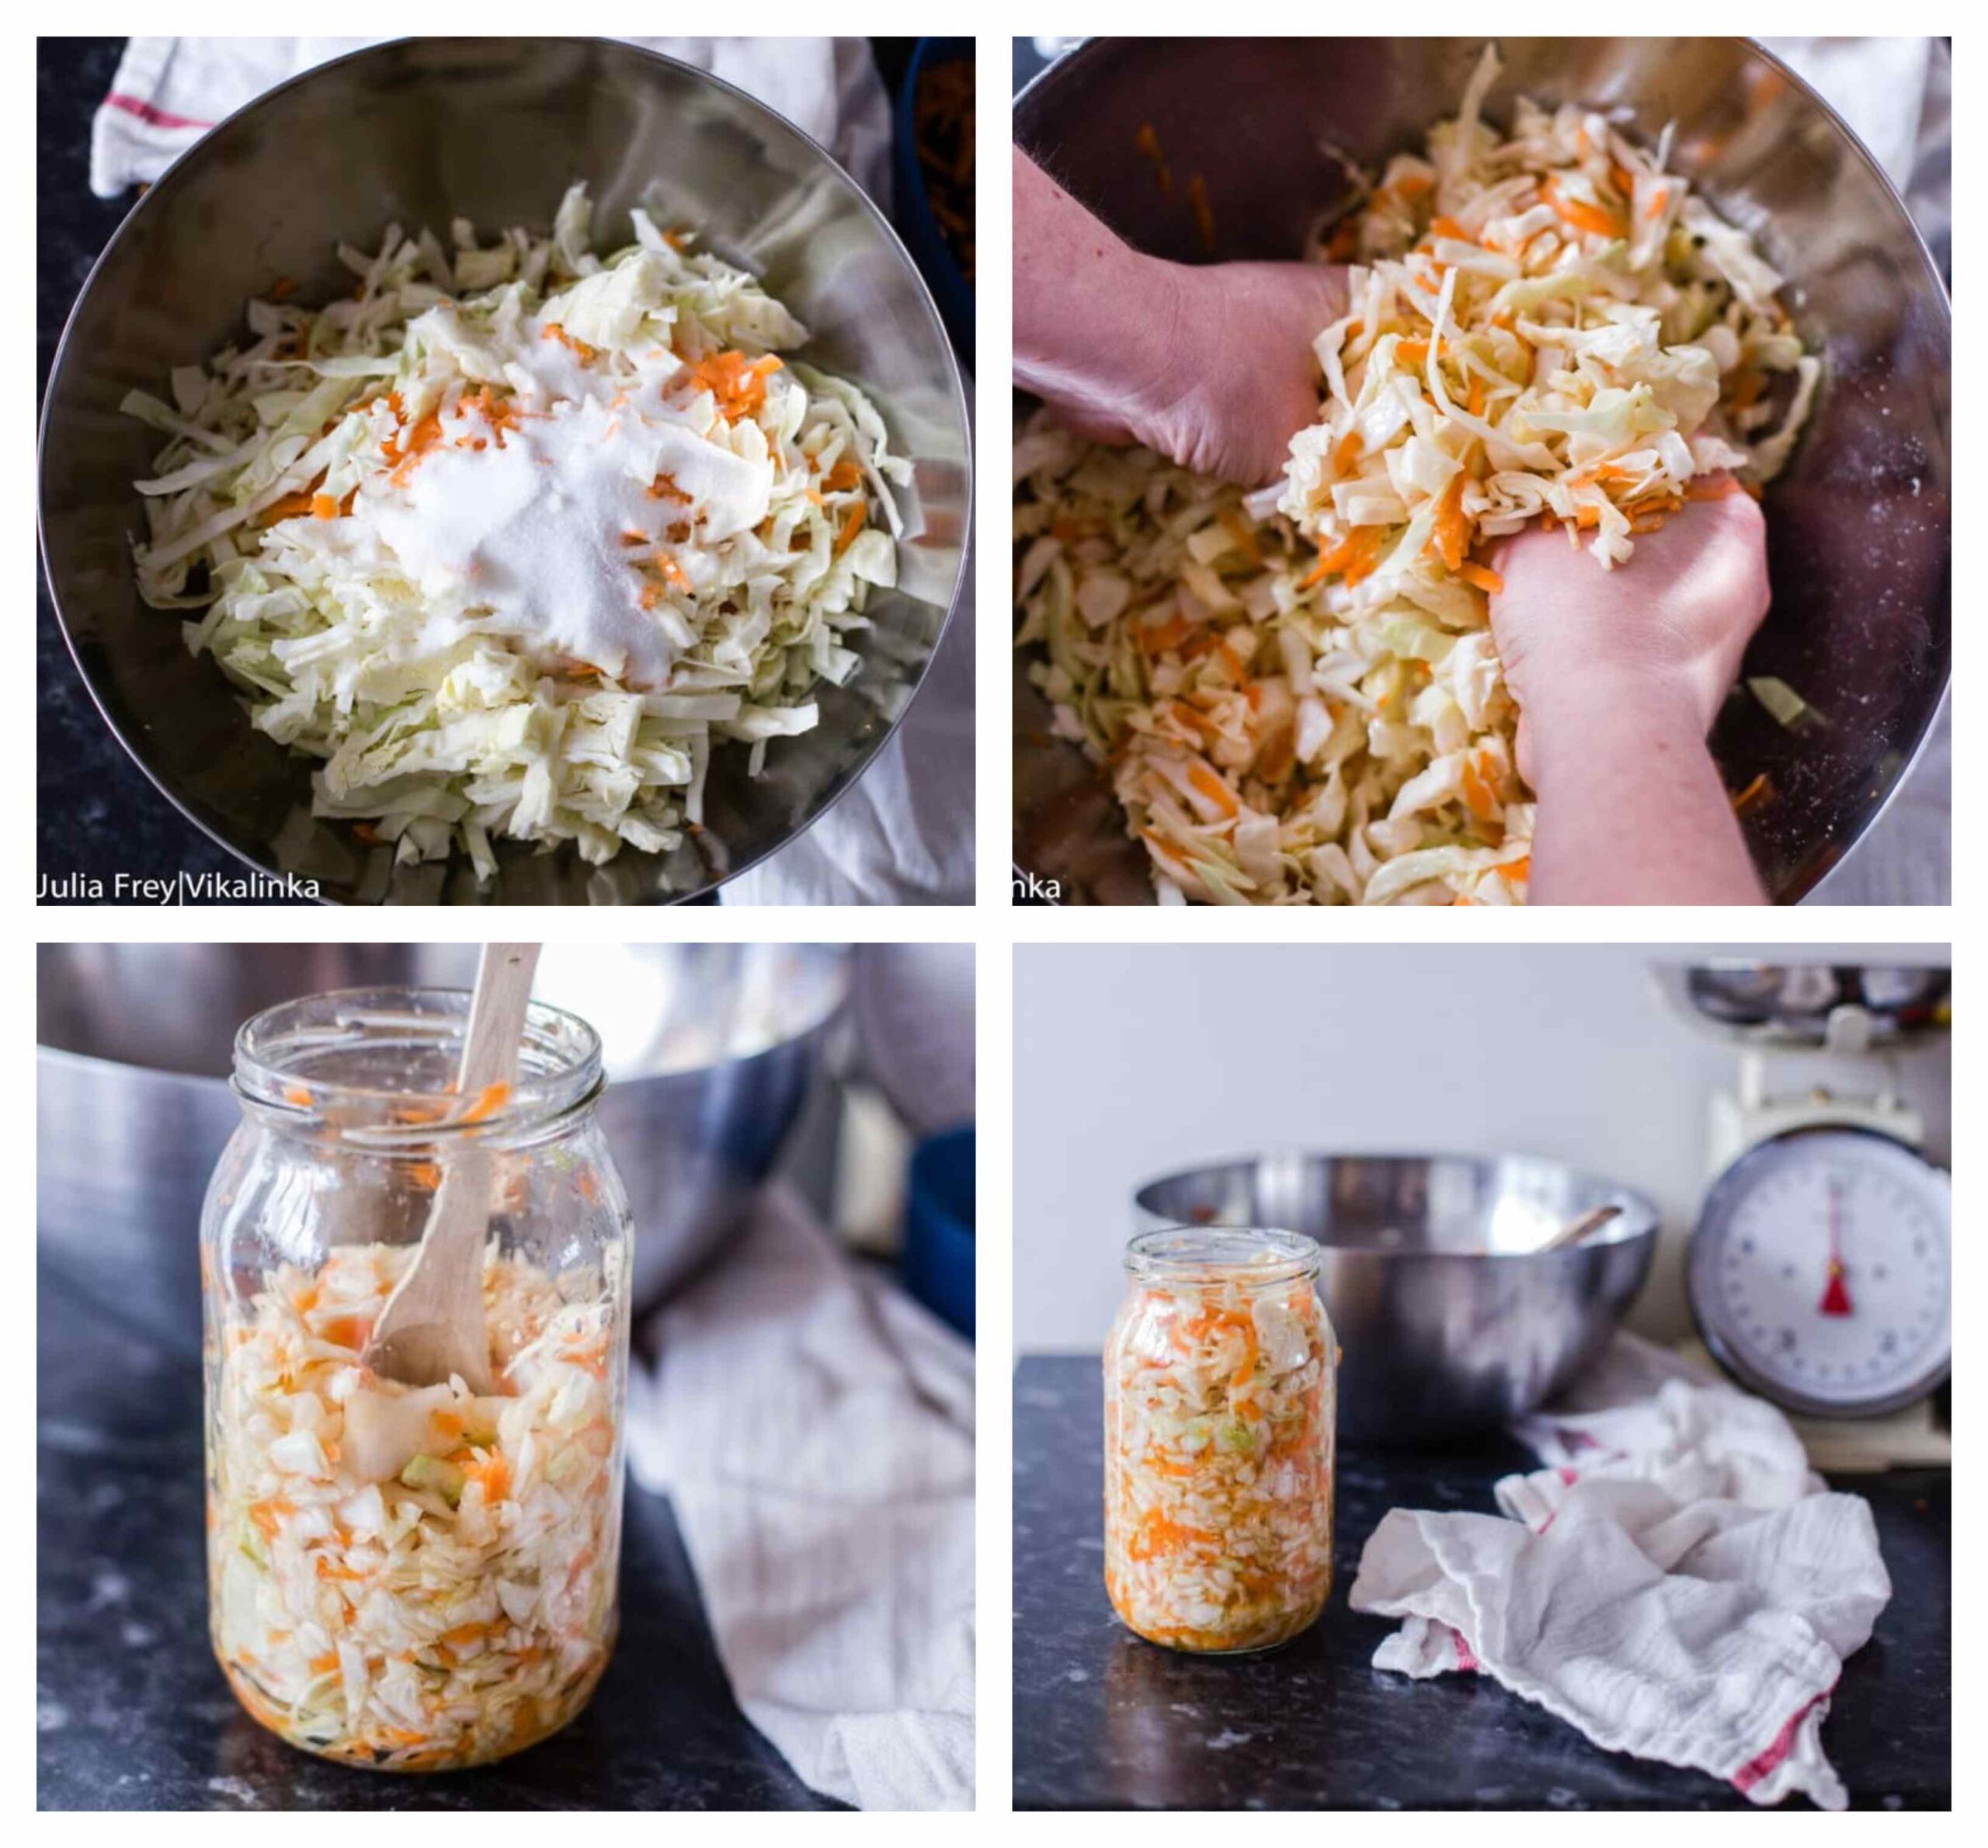 sauerkraut process images